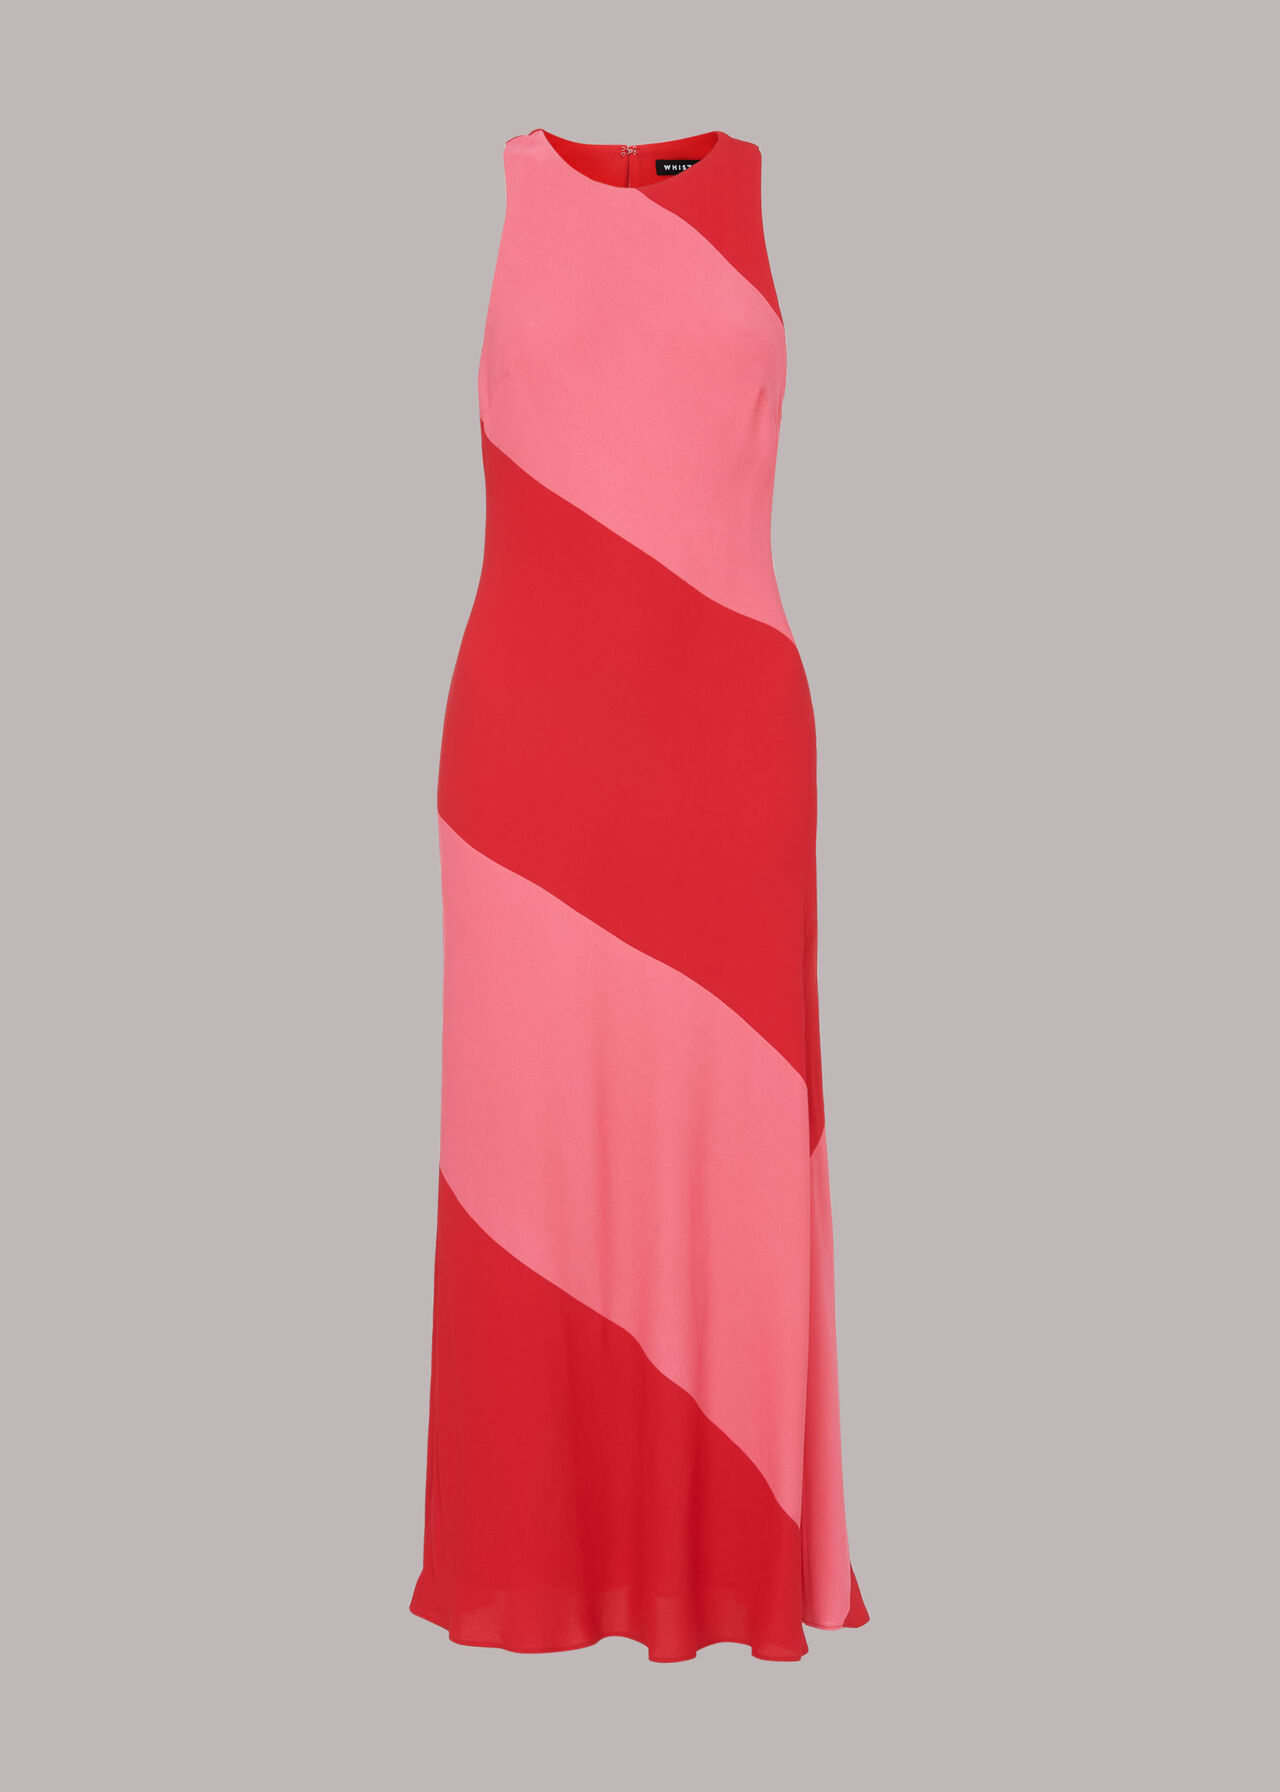 Poppy Panelled Dress